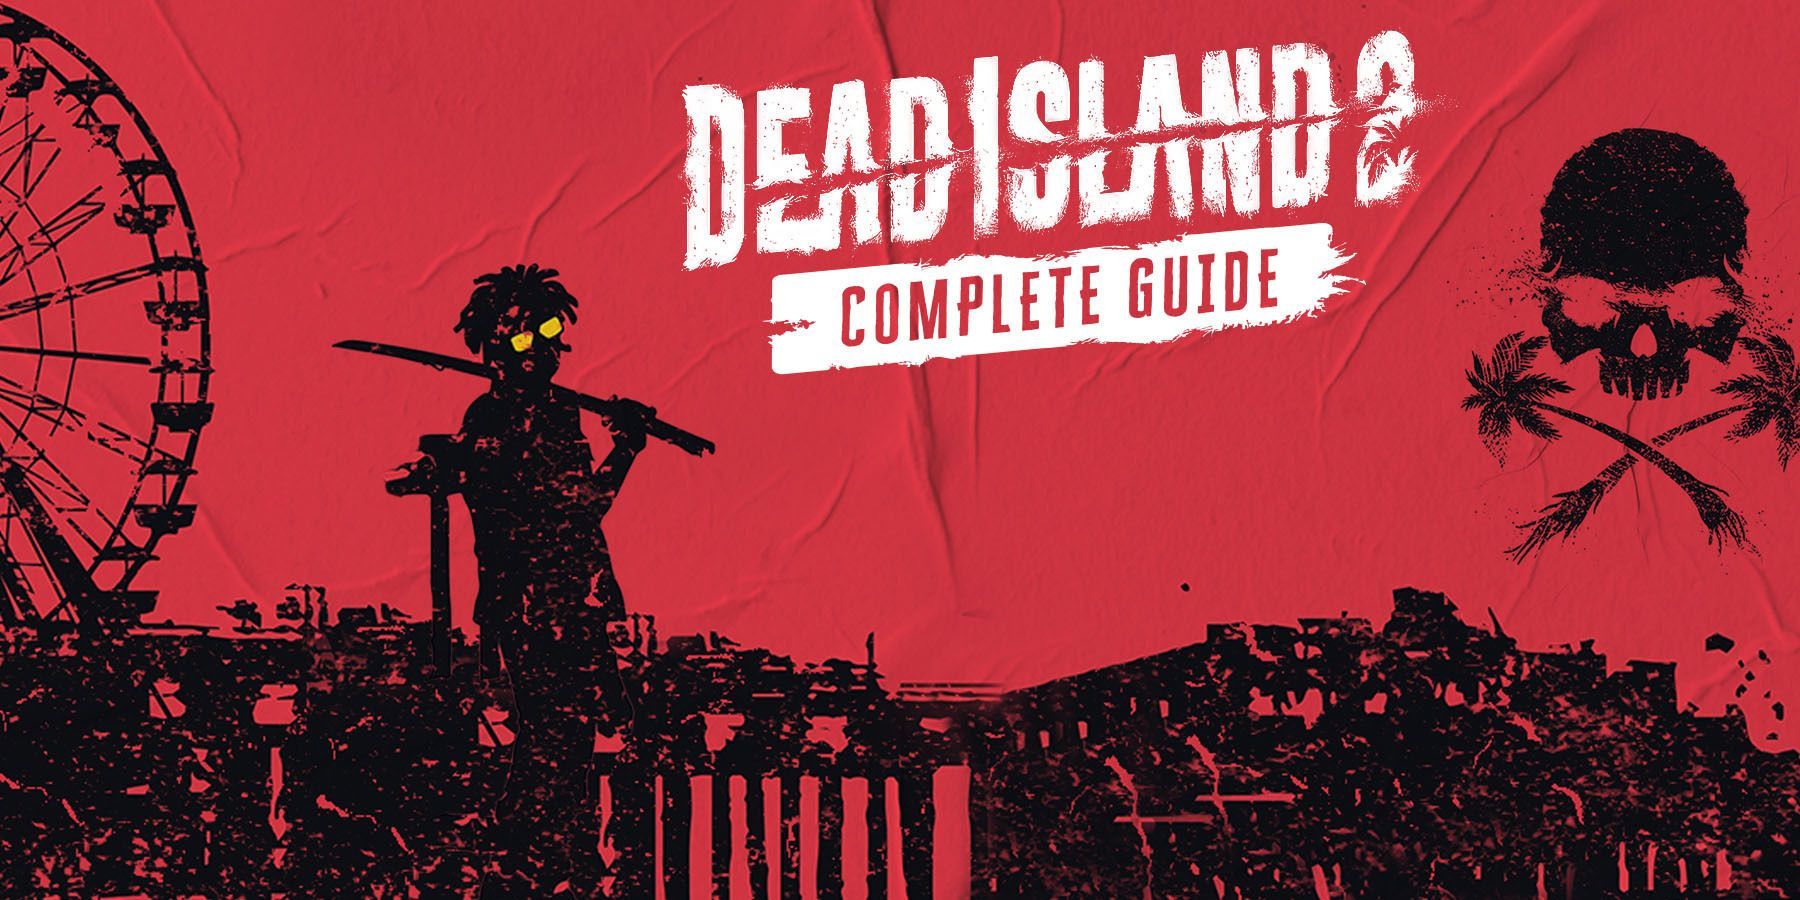 Dead Island 2 [Redacted] Guide